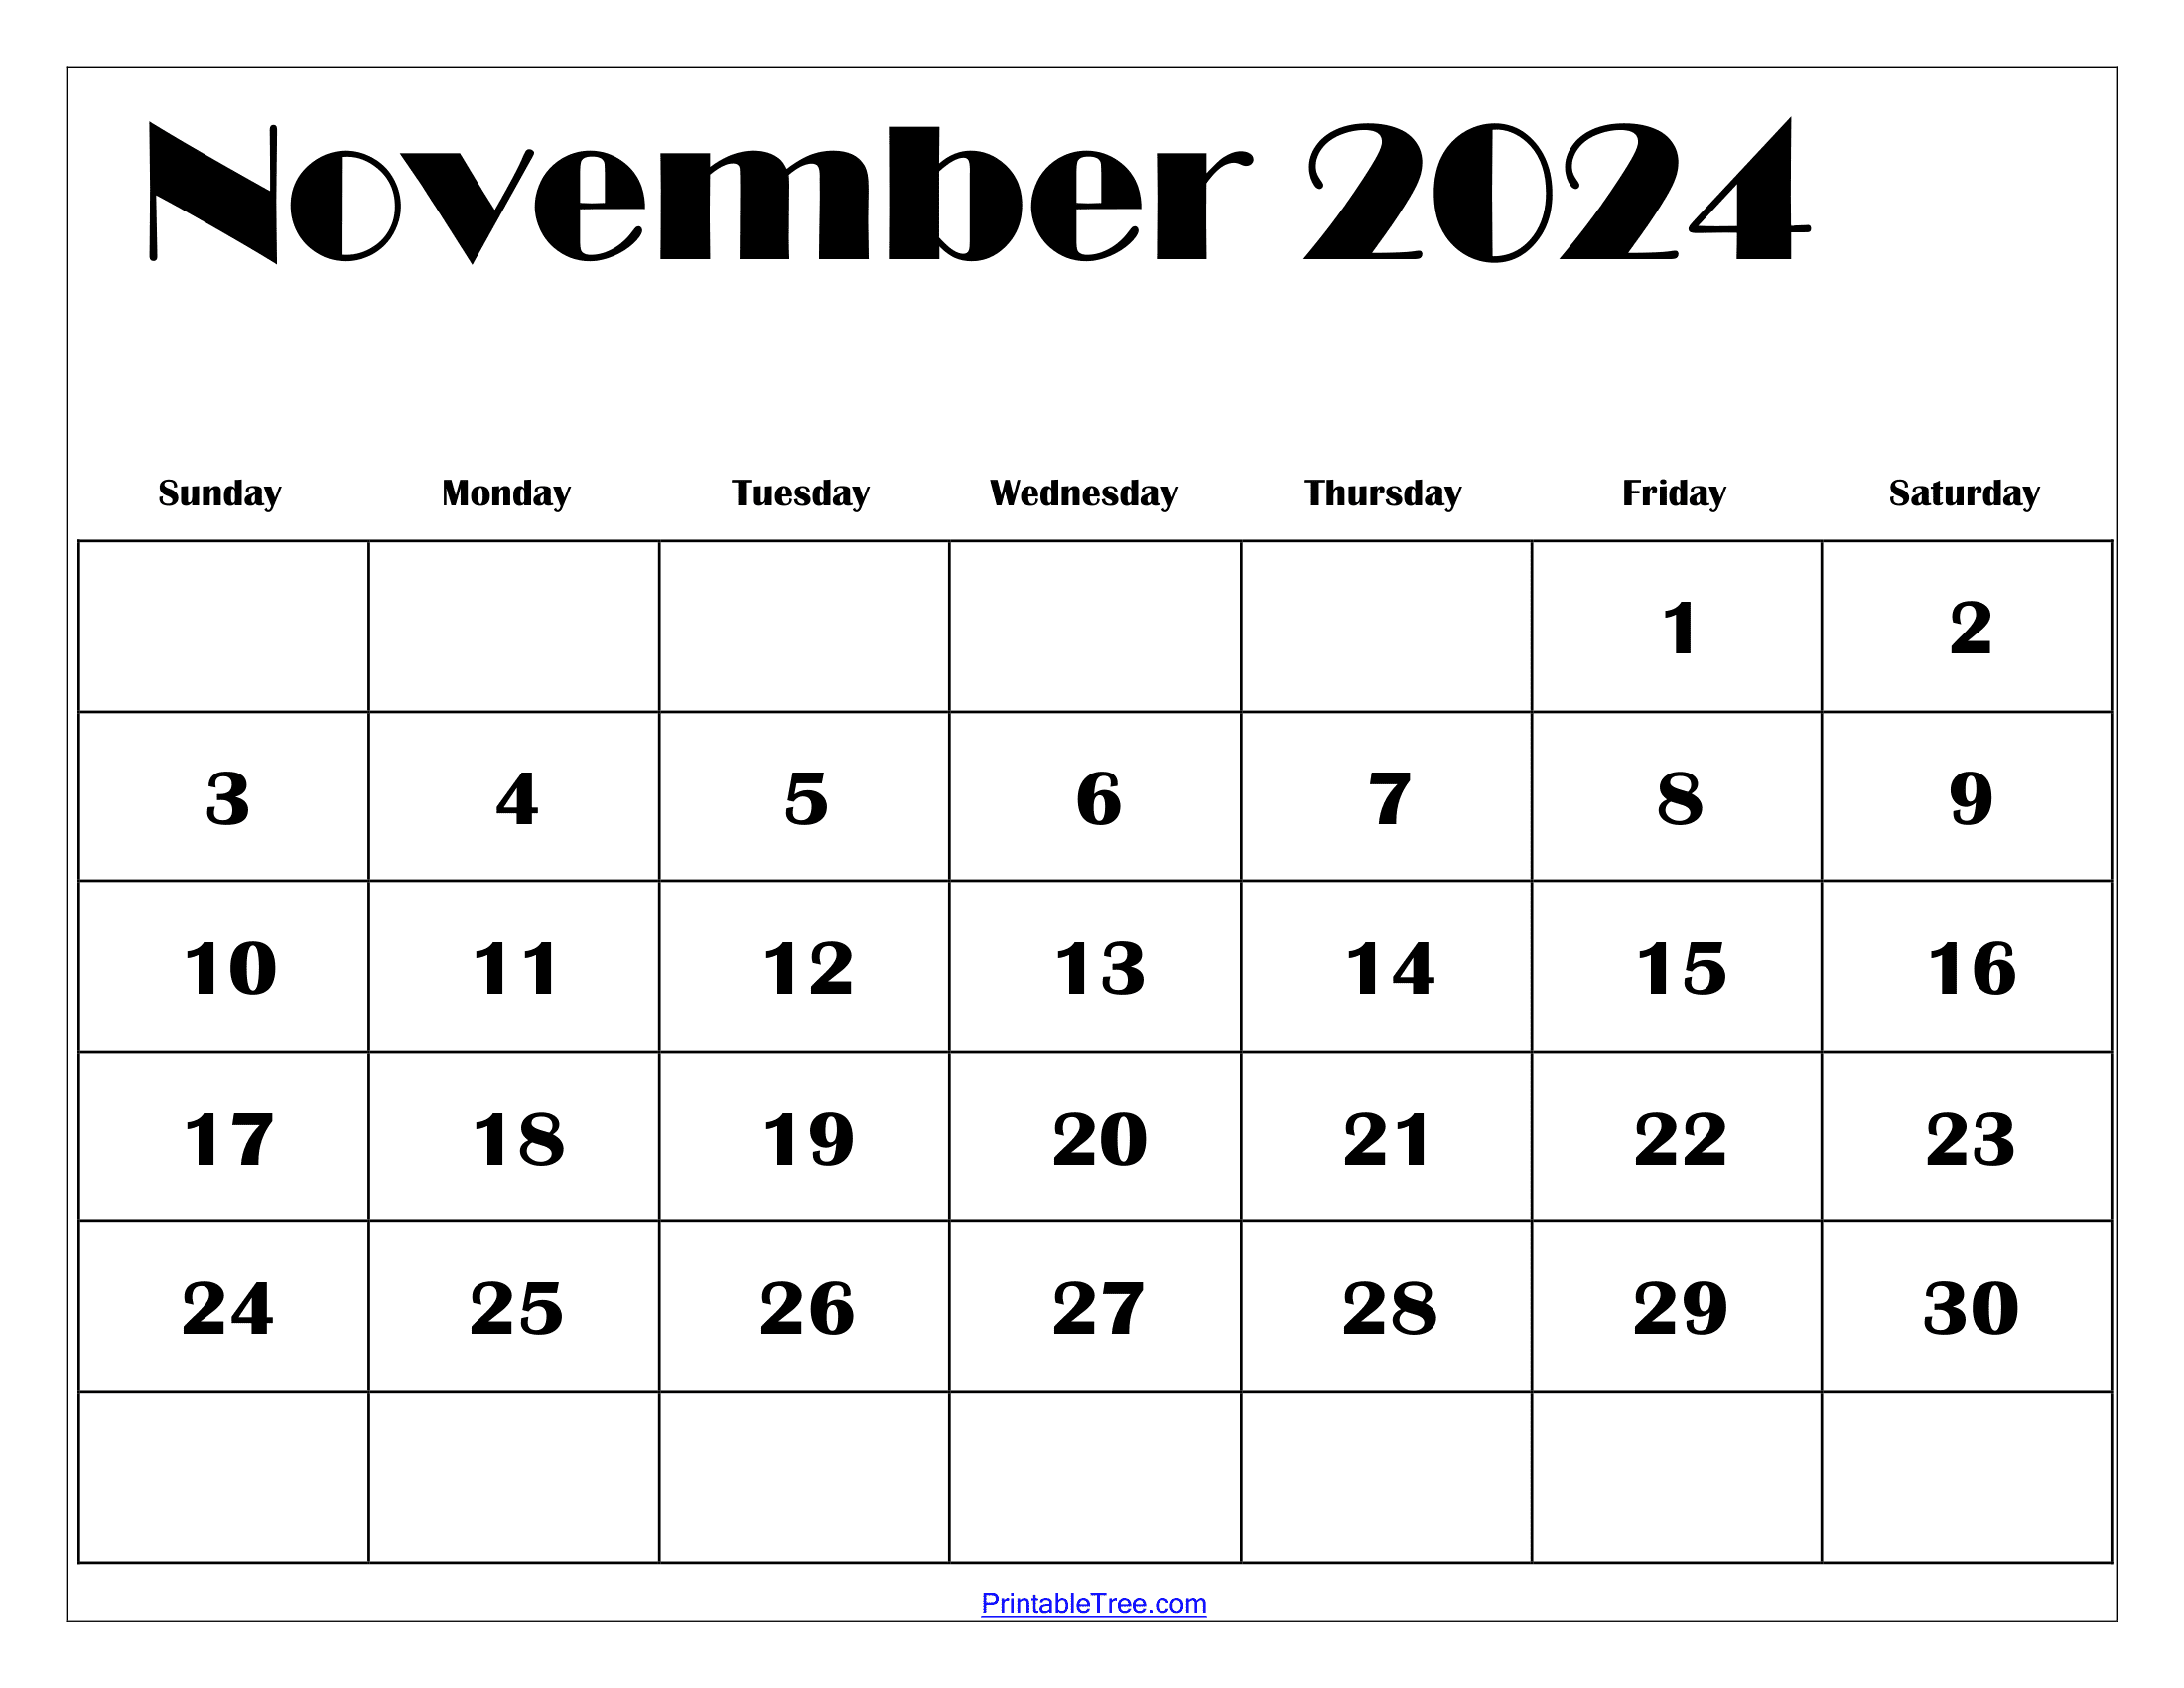 November 2024 Calendar Printable Pdf Template With Holidays for Nov 2024 Calendar Printable